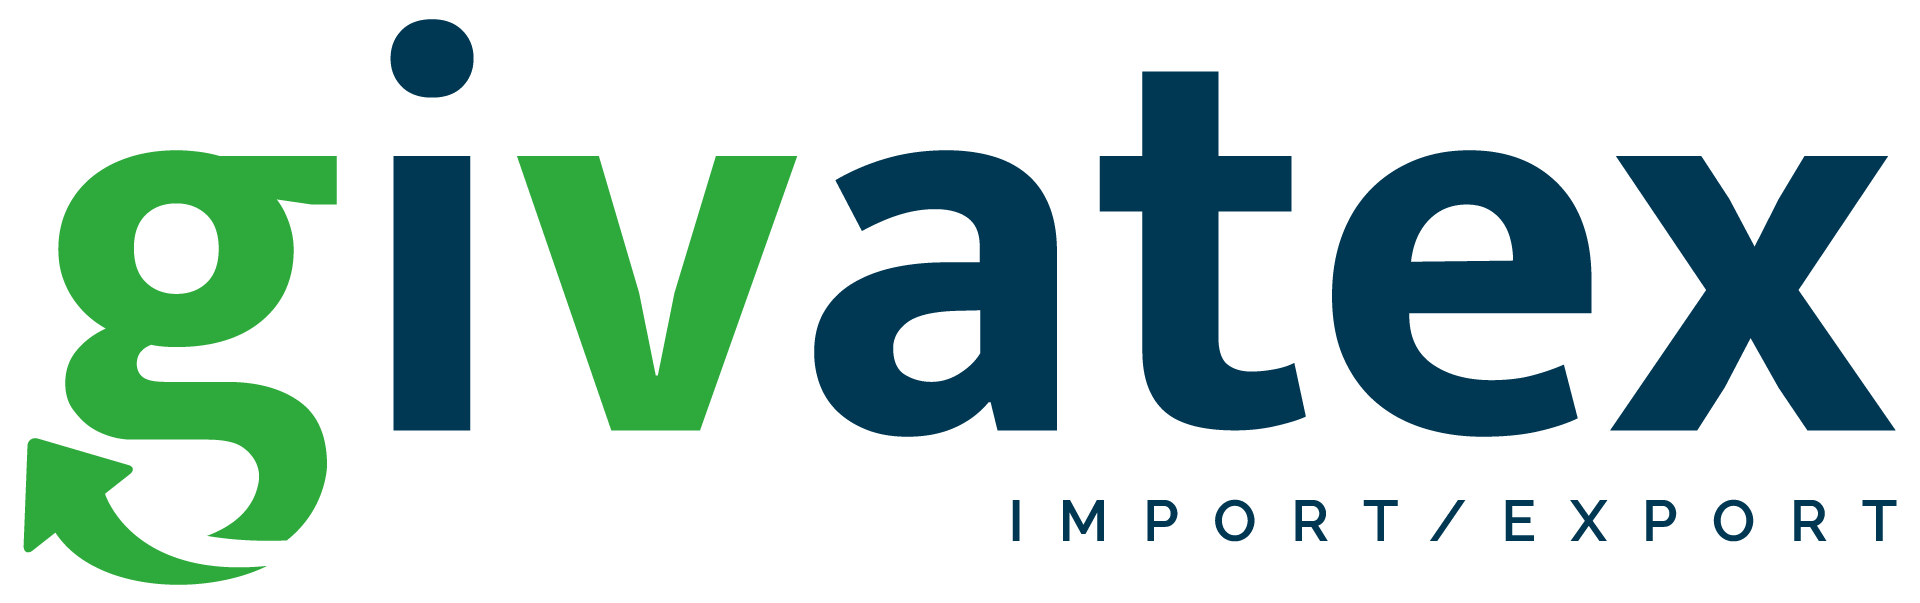 Givatex Logo